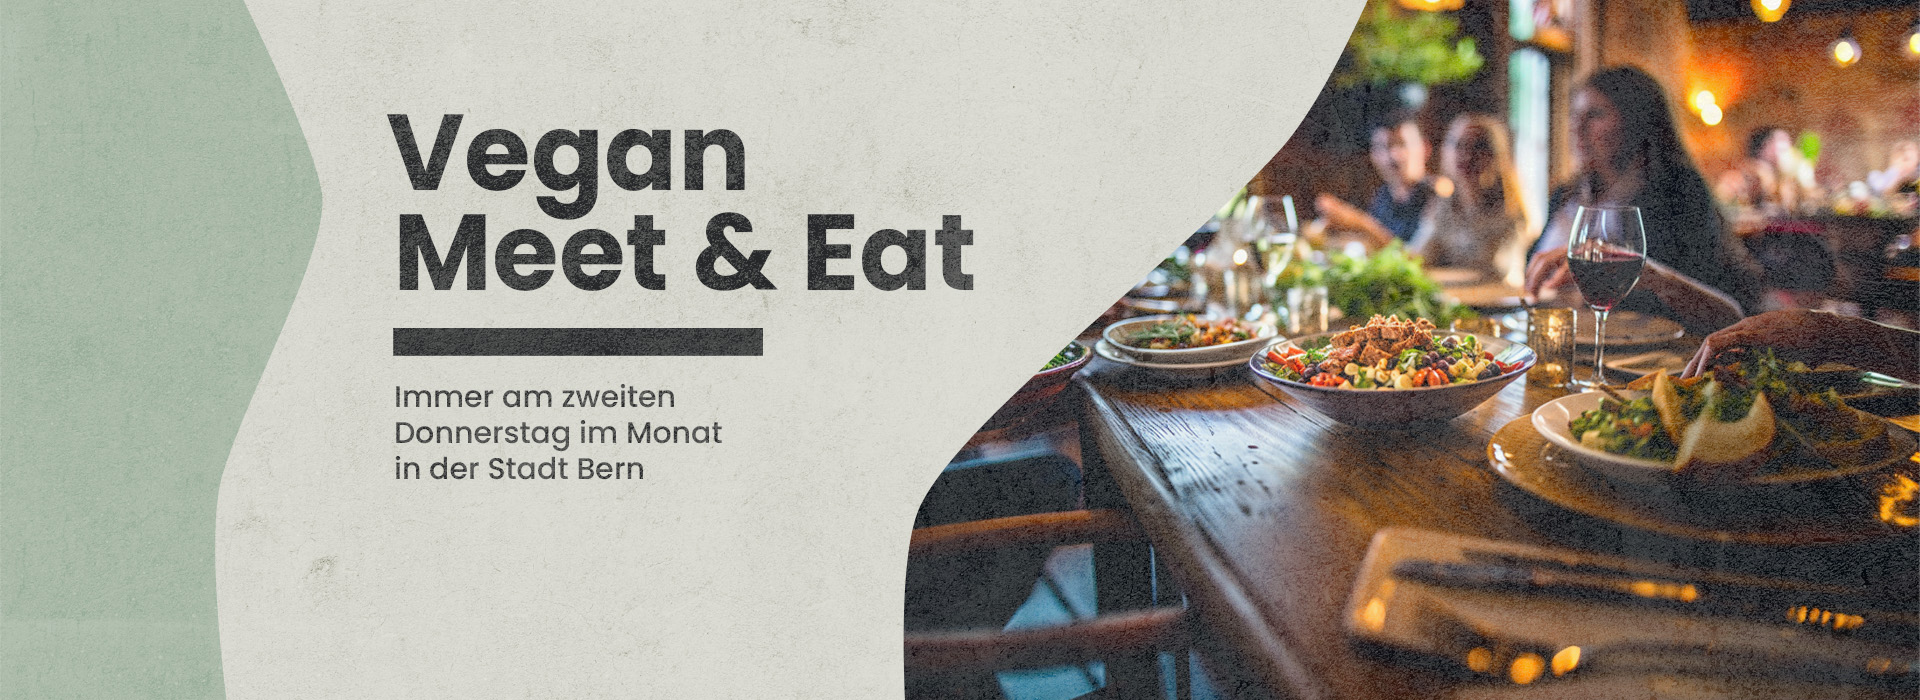 Vegan Meet & Eat Bern - April